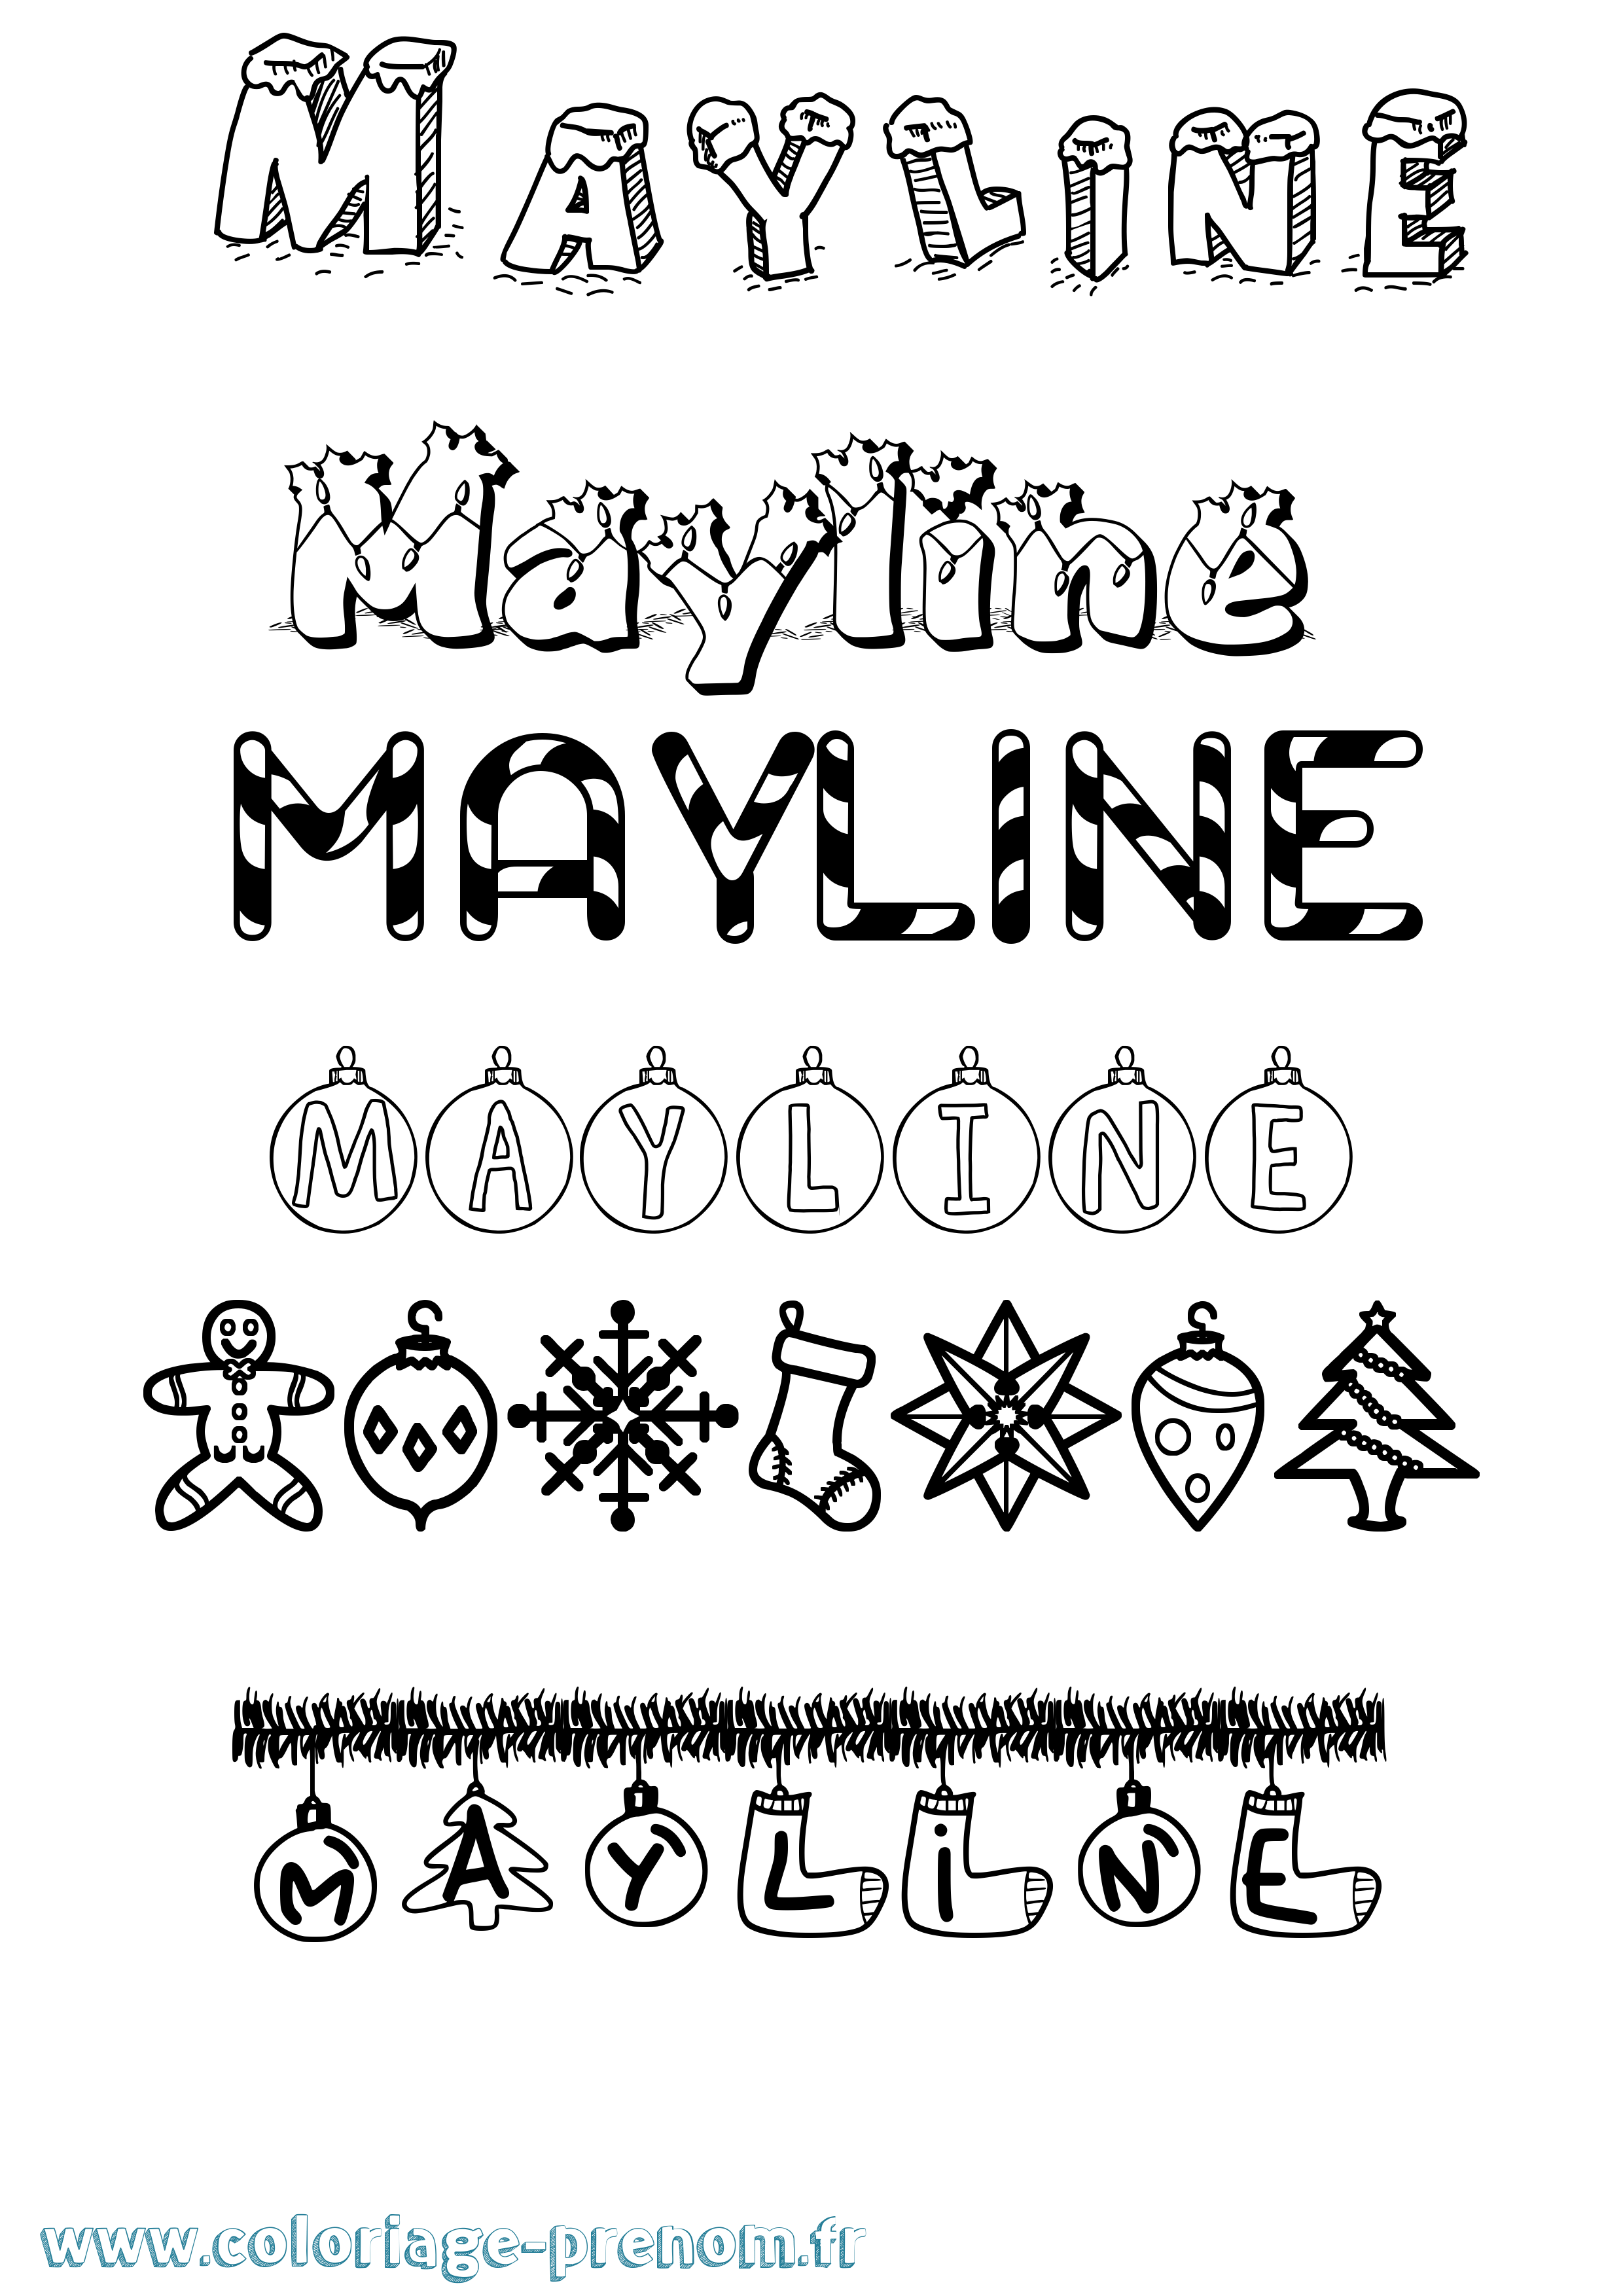 Coloriage prénom Mayline